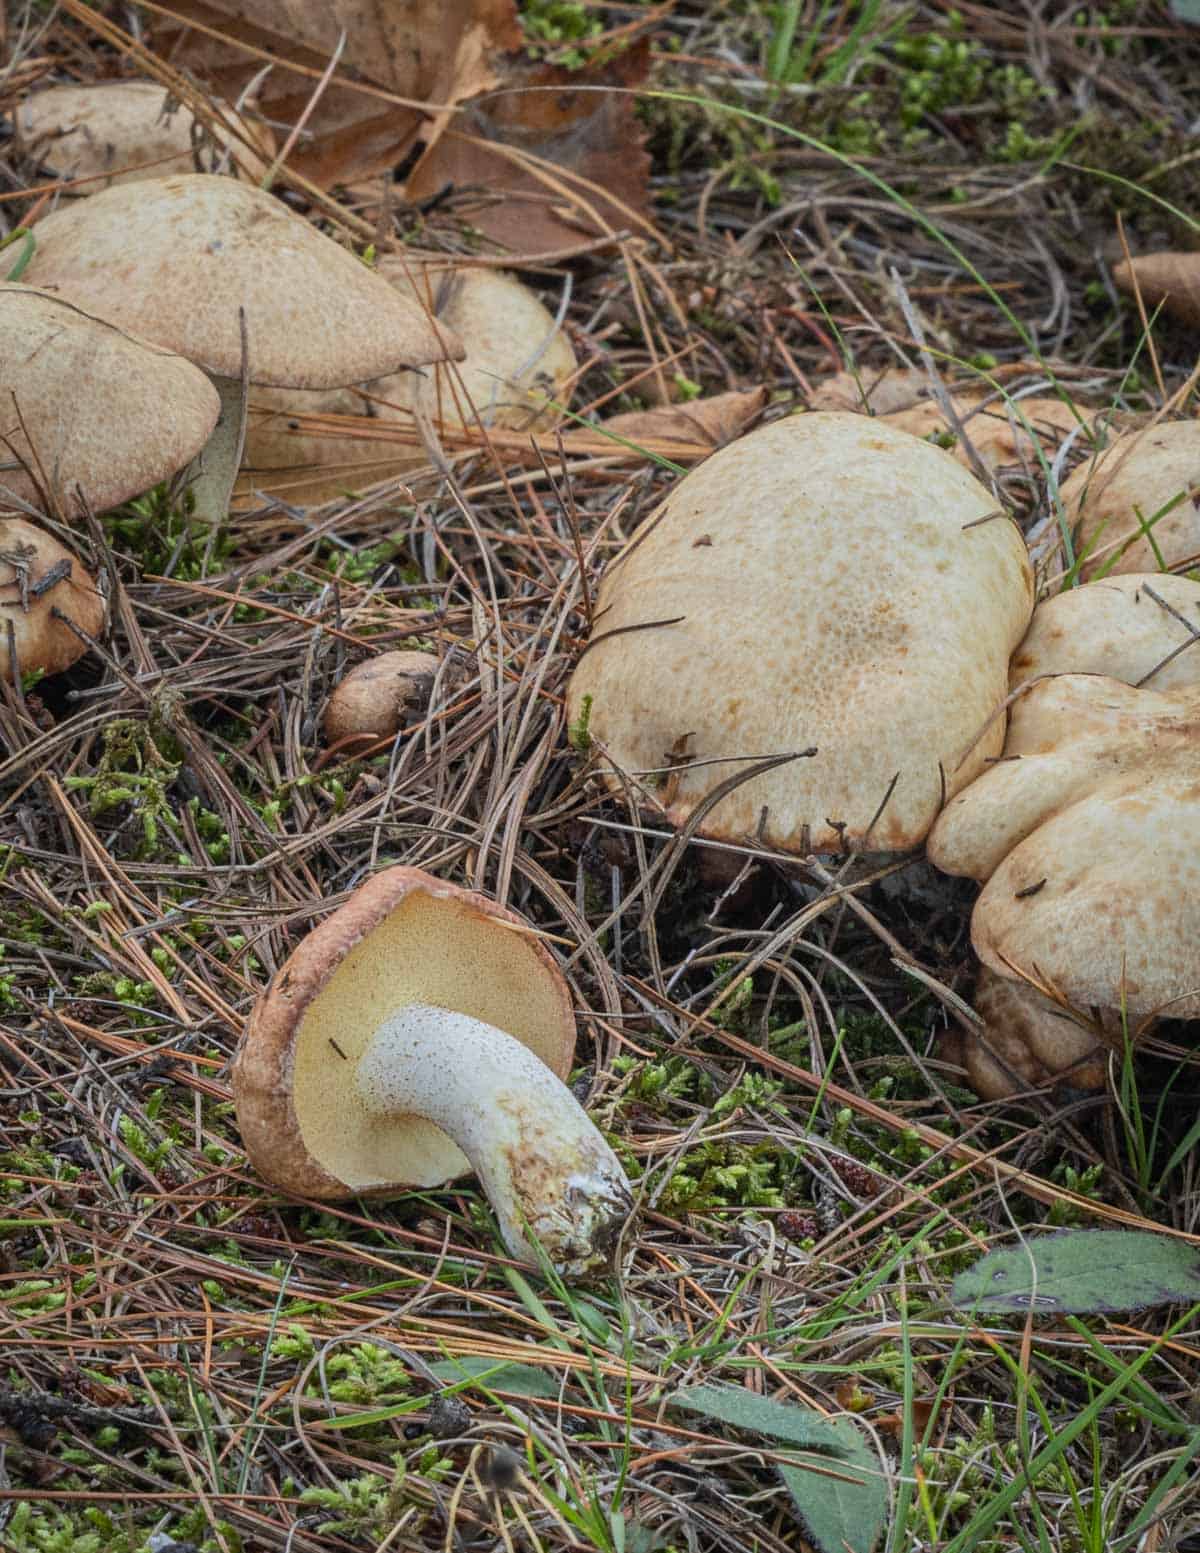 Suillus granulatus mushrooms growing in a pine forest. 